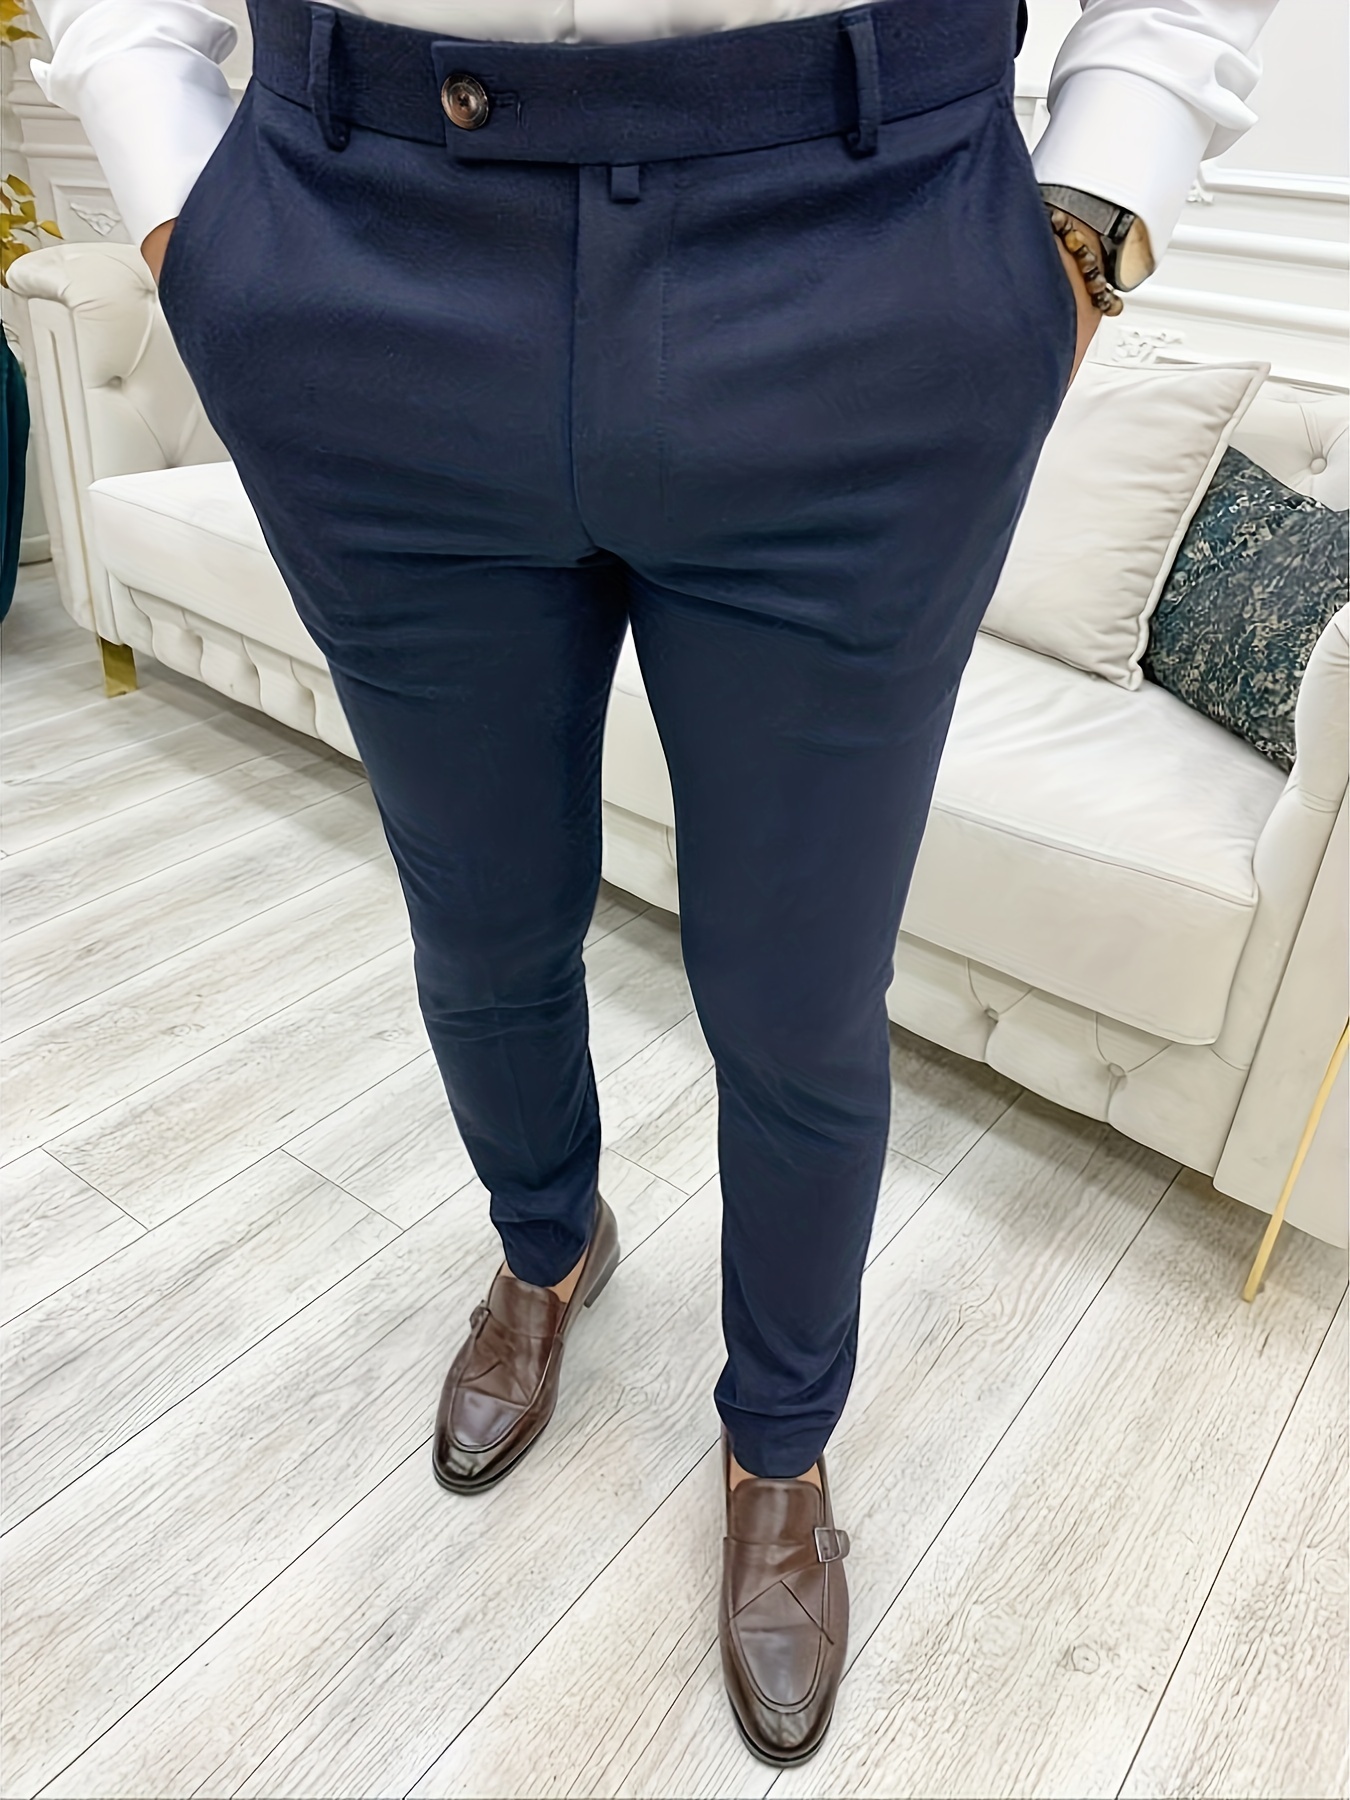 Dress Pants for Men: Look Sharp Running Your Business